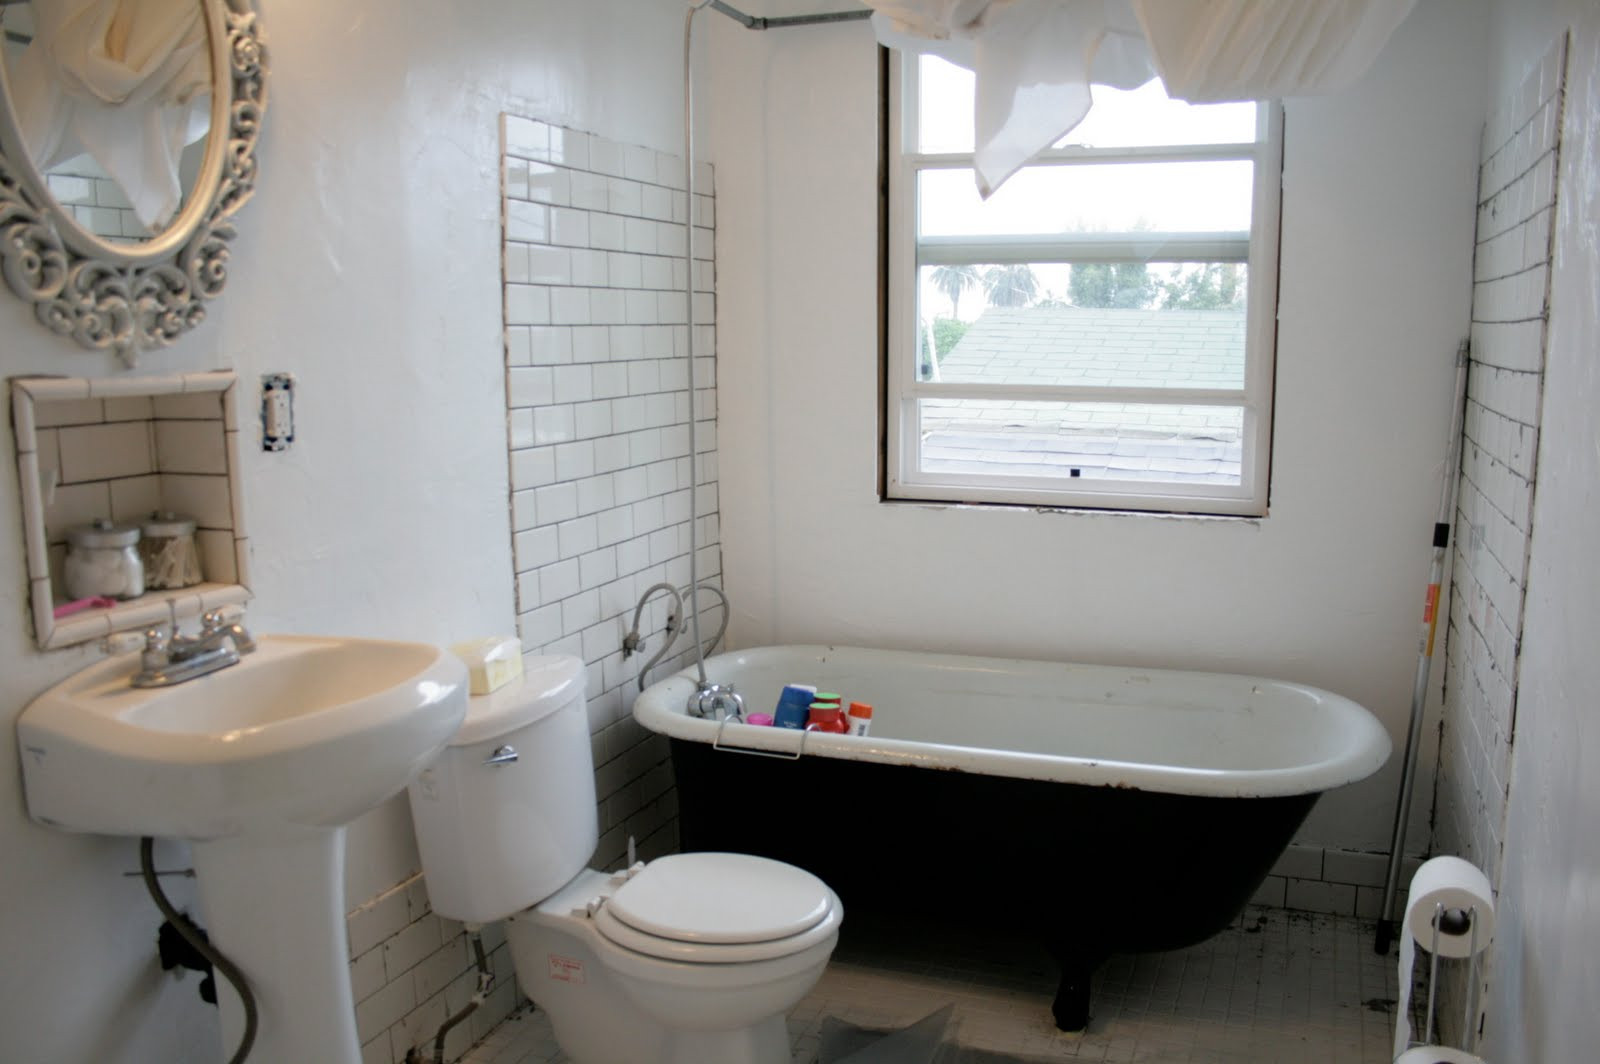 Clawfoot Tub In Small Bathroom
 Bathroom Tub For Small Bathrooms With Shower bo